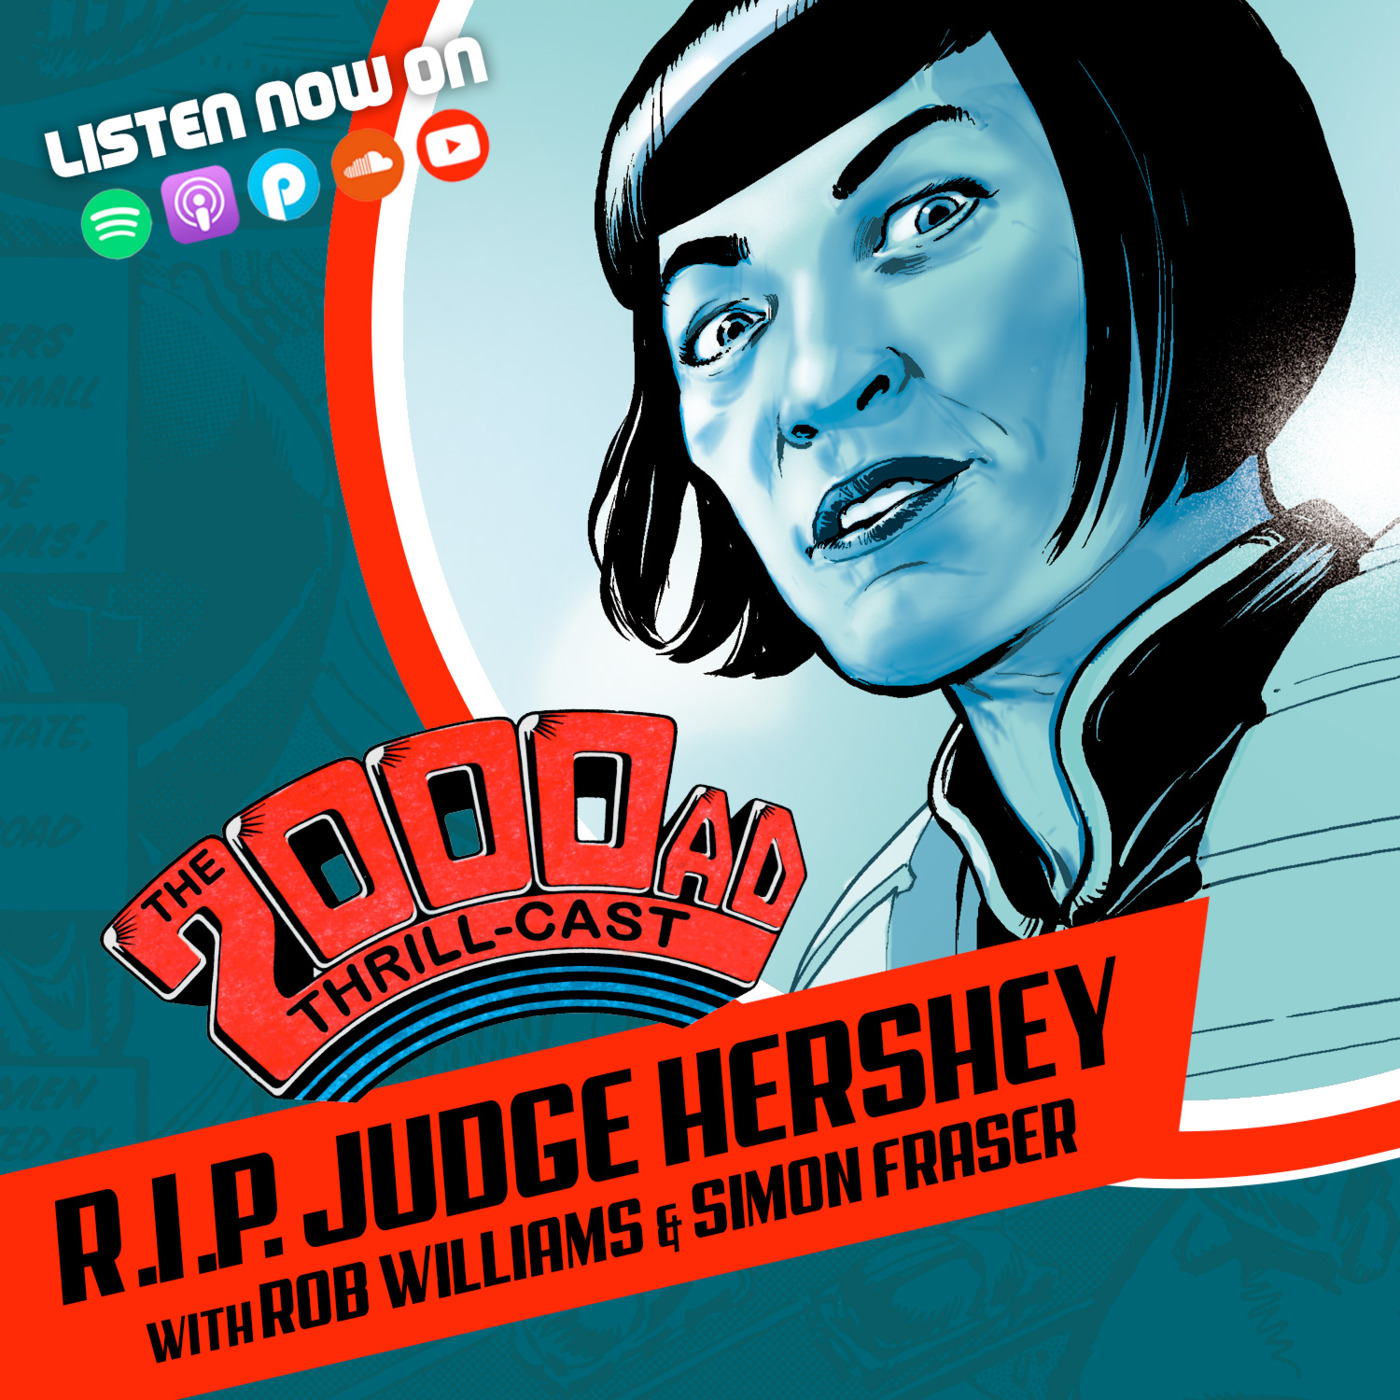 Episode 218: R.I.P. Judge Hershey